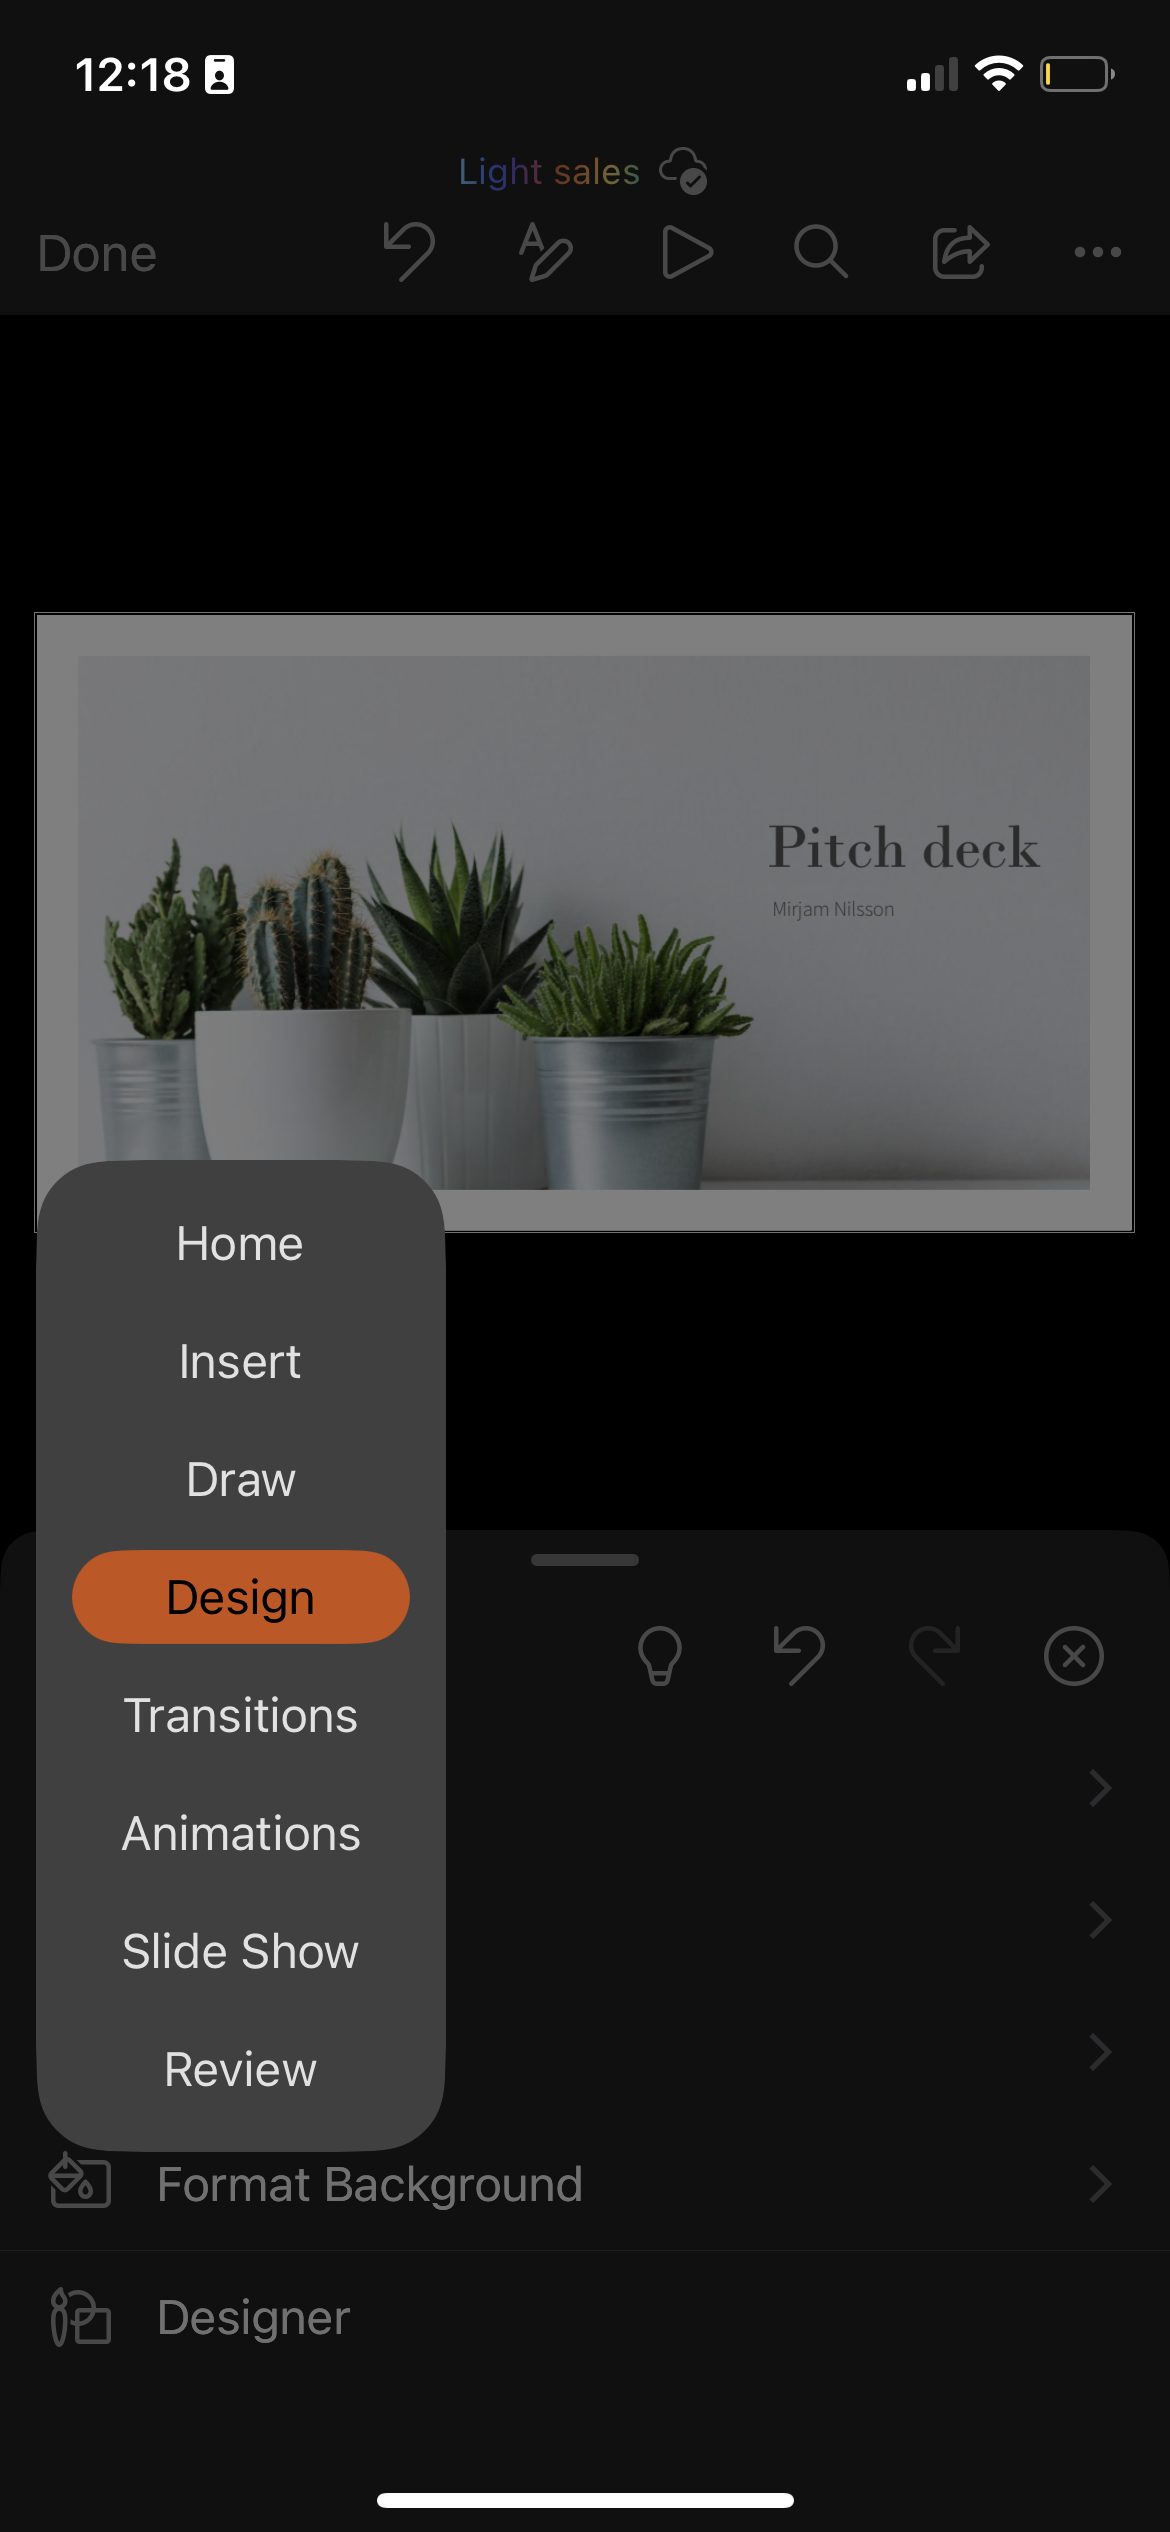 Design menu on iPhone